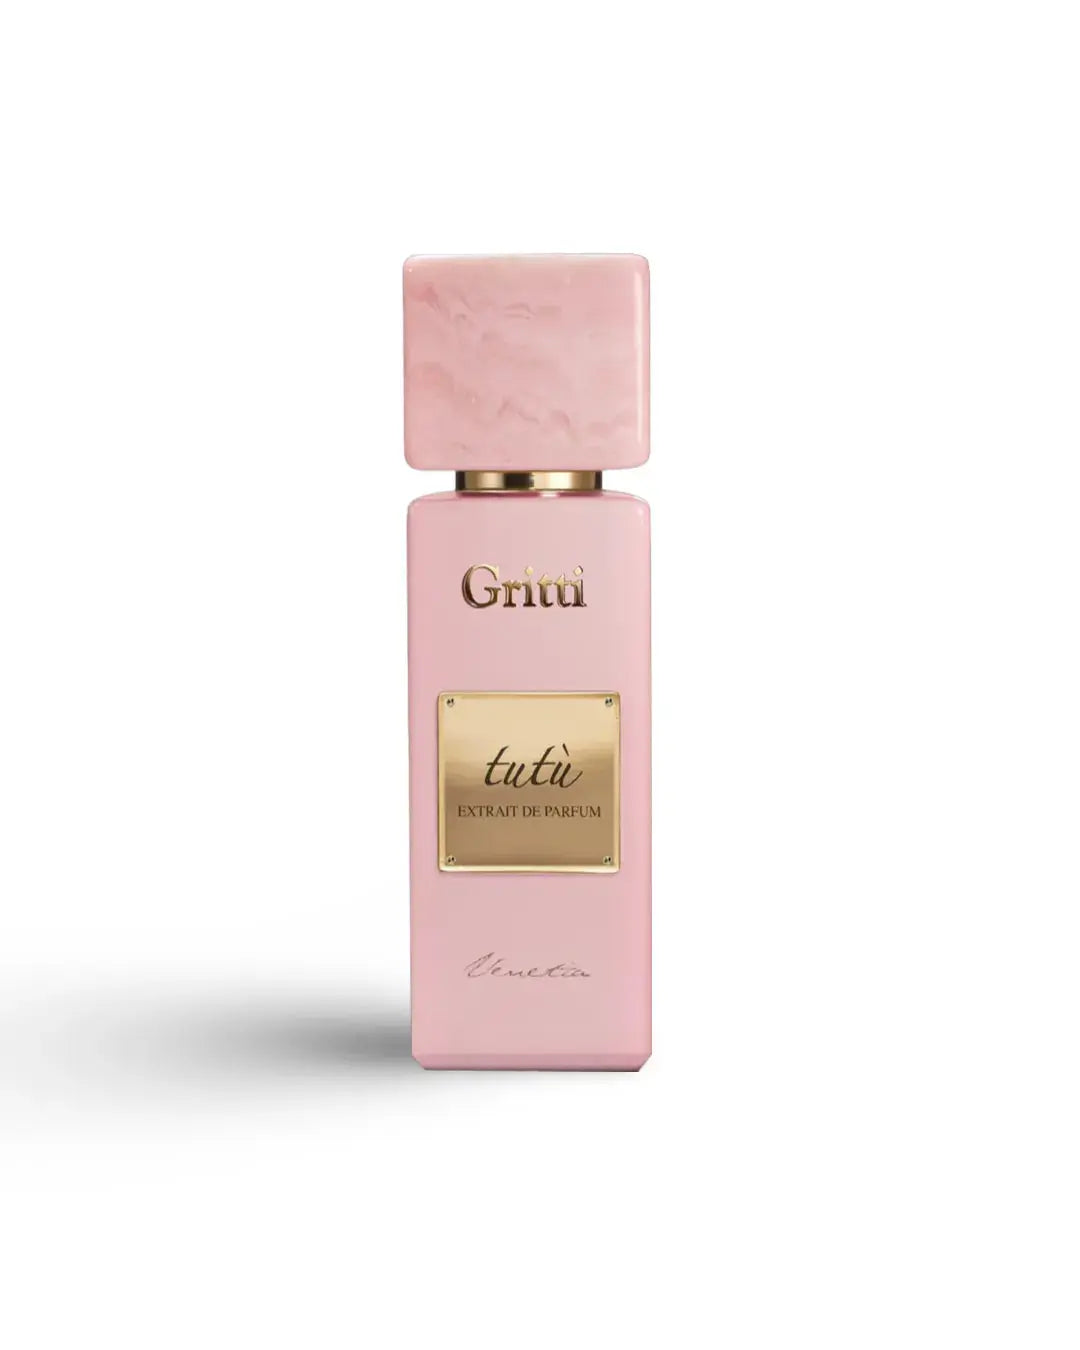 Extracto de Perfume Tutù Gritti 100ml